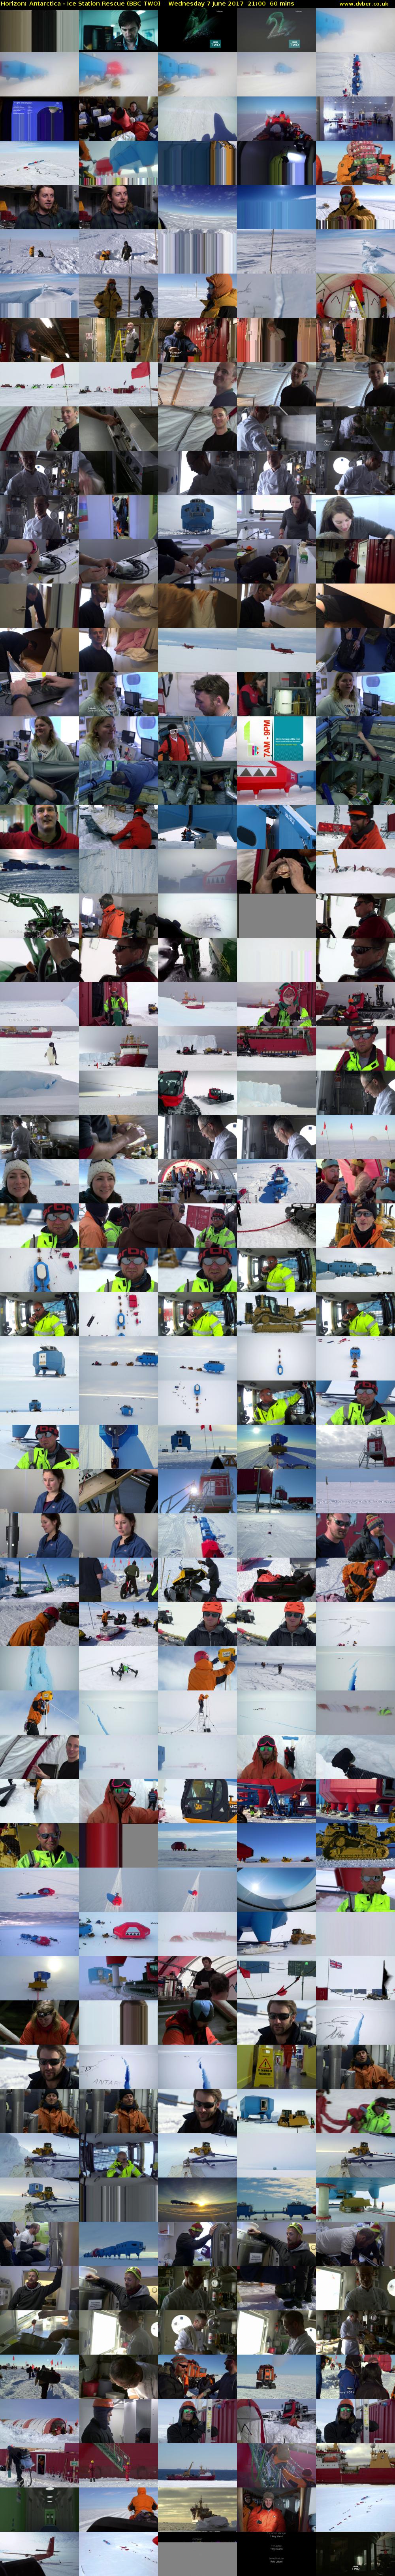 Horizon: Antarctica - Ice Station Rescue (BBC TWO) Wednesday 7 June 2017 21:00 - 22:00